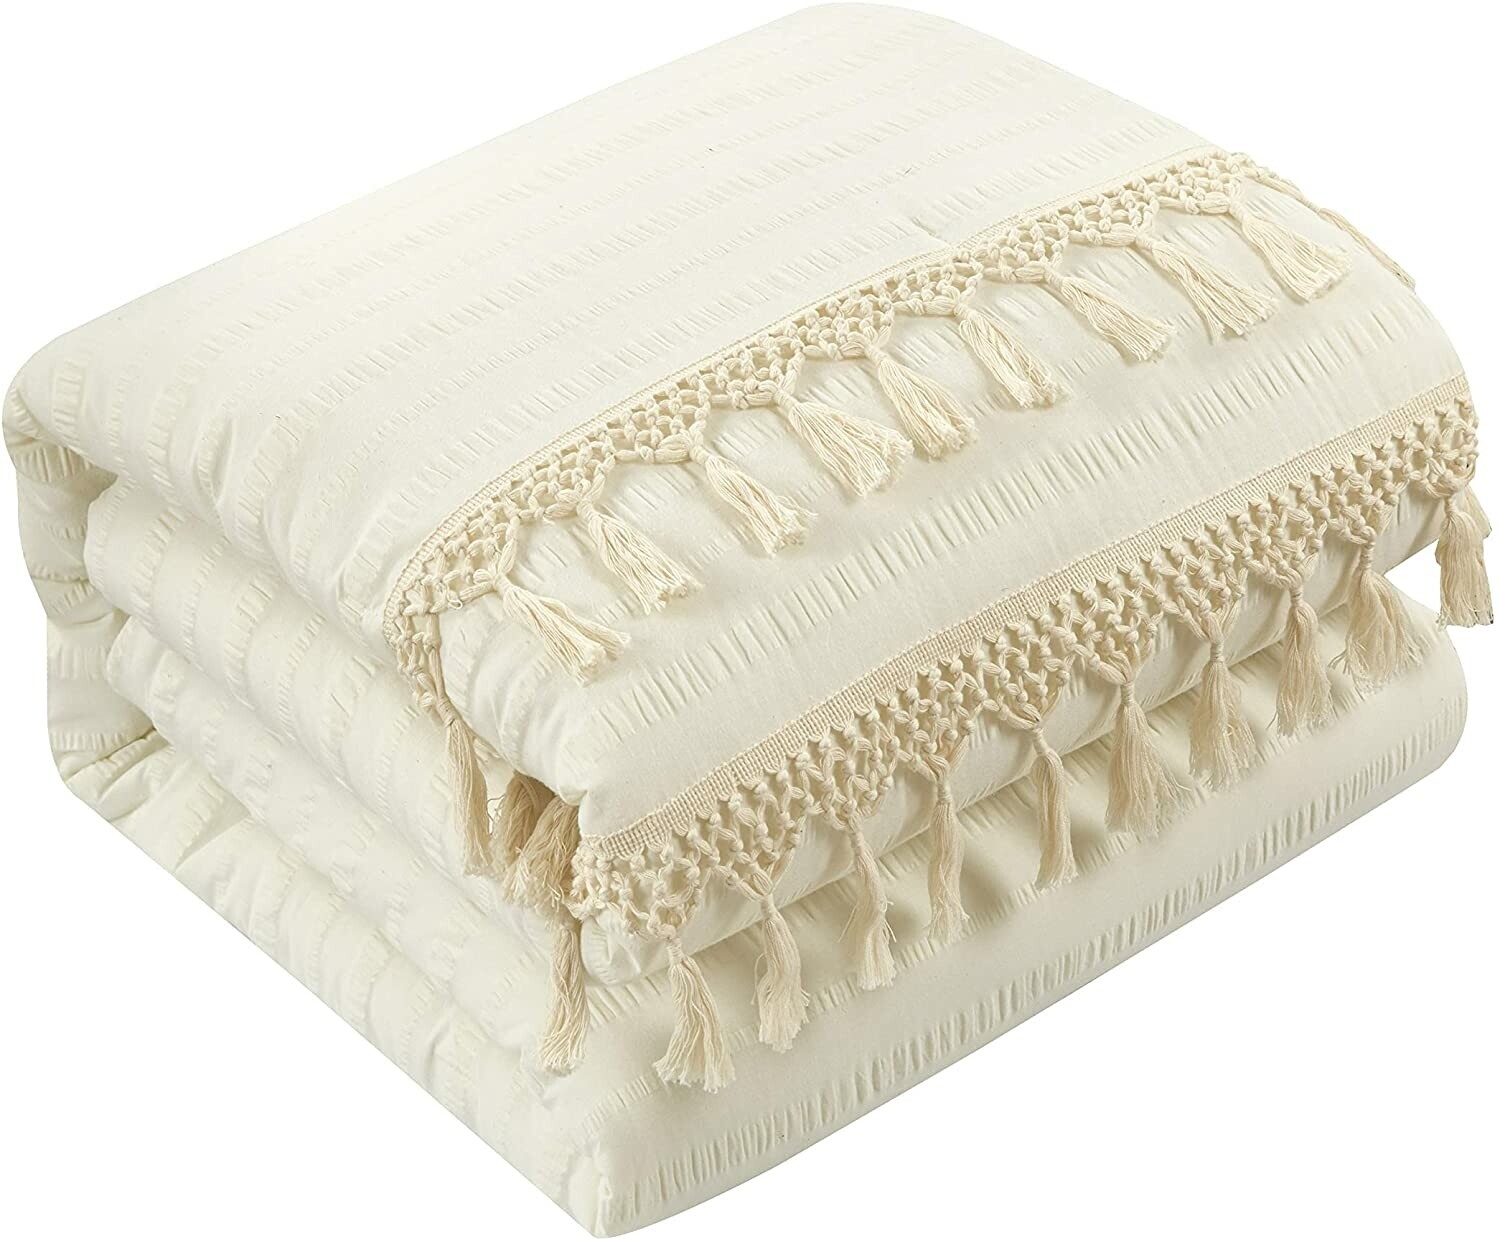 American Kids Ava Comforter Set, Twin, White cream blanket bedding, with  fringe.